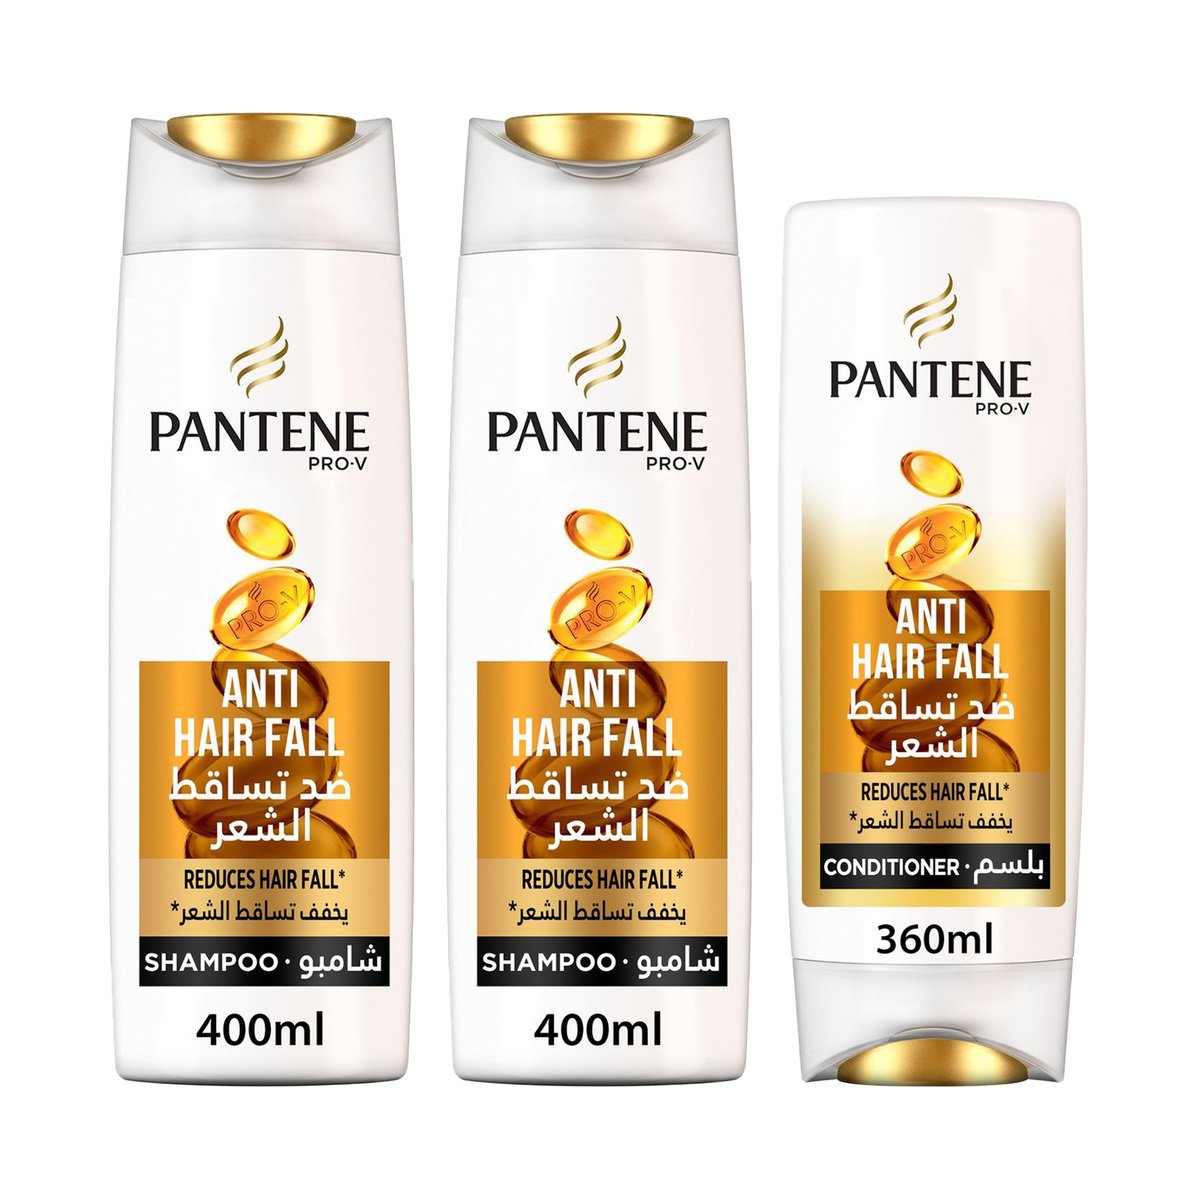 Pantene Anti-Hair Fall Shampoo 2 x 400 ml + Conditioner 360 ml